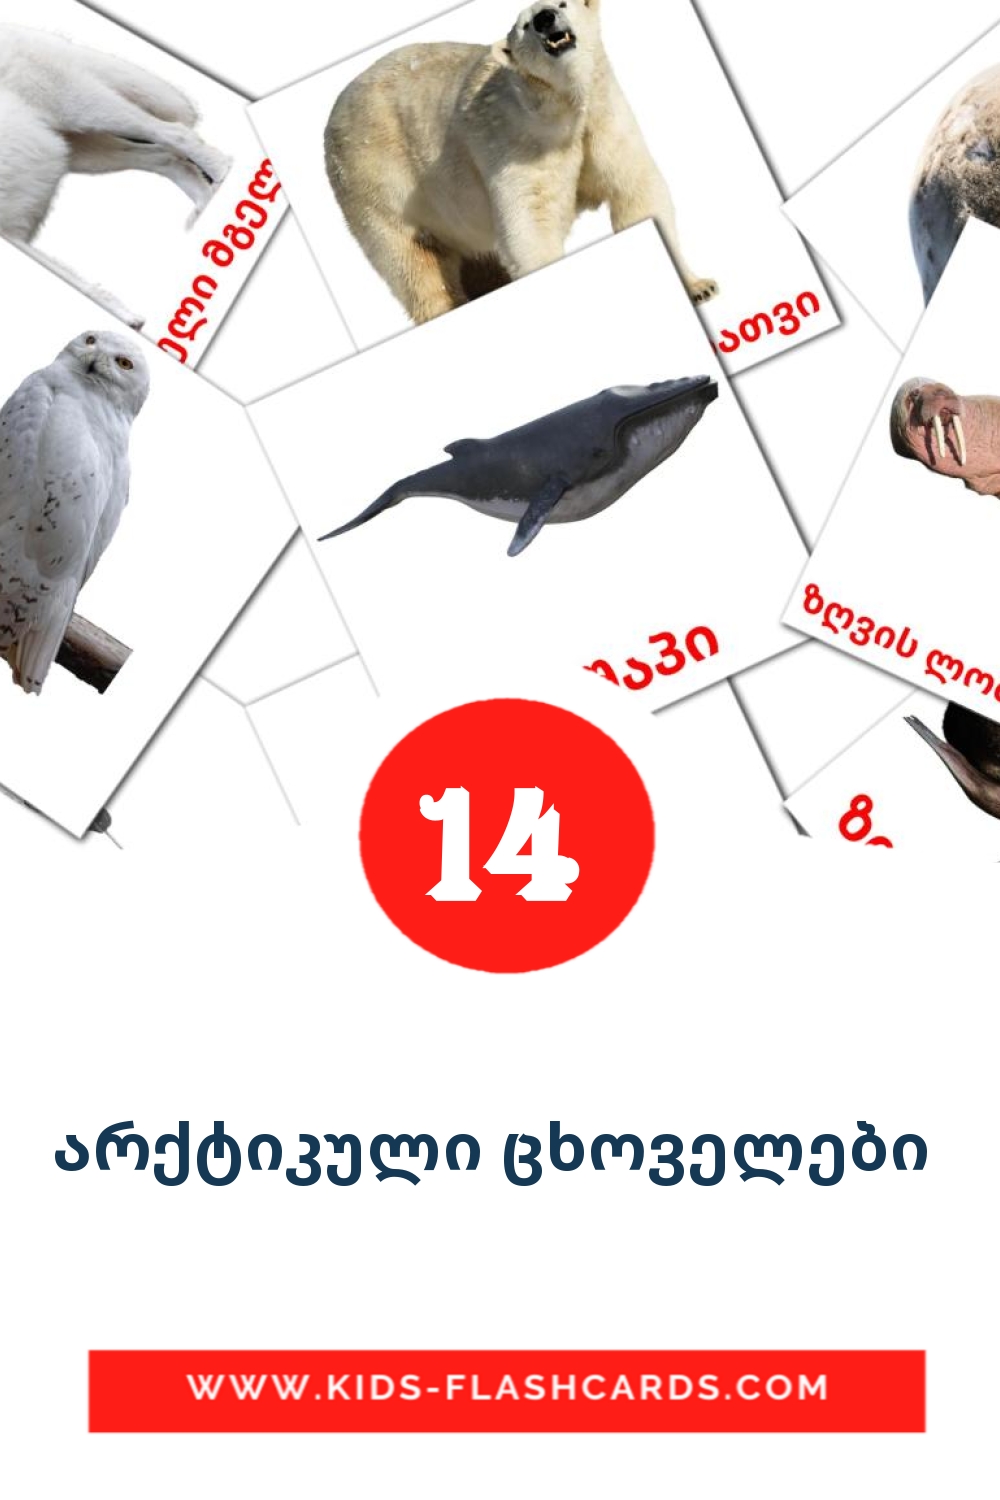 14 carte illustrate di არქტიკული ცხოველები  per la scuola materna in georgiano